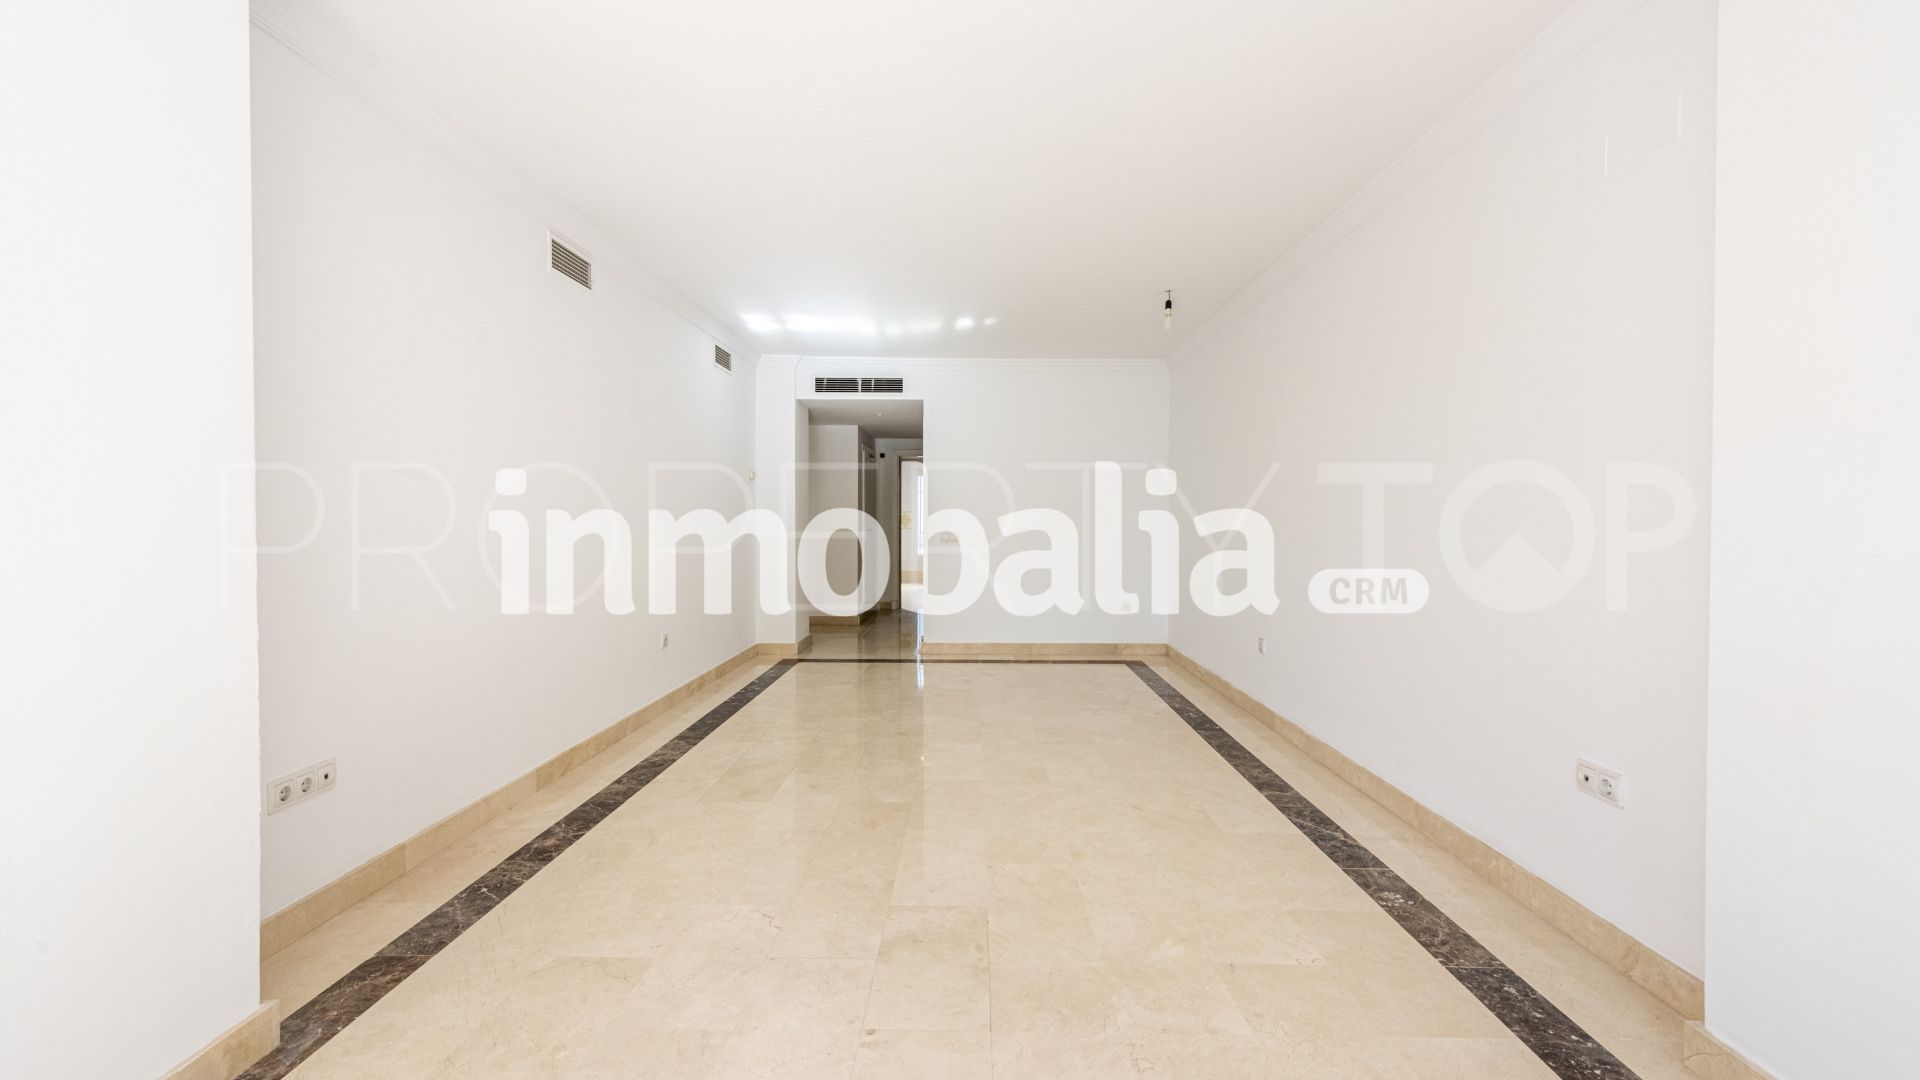 2 bedrooms ground floor apartment in San Pedro de Alcantara for sale